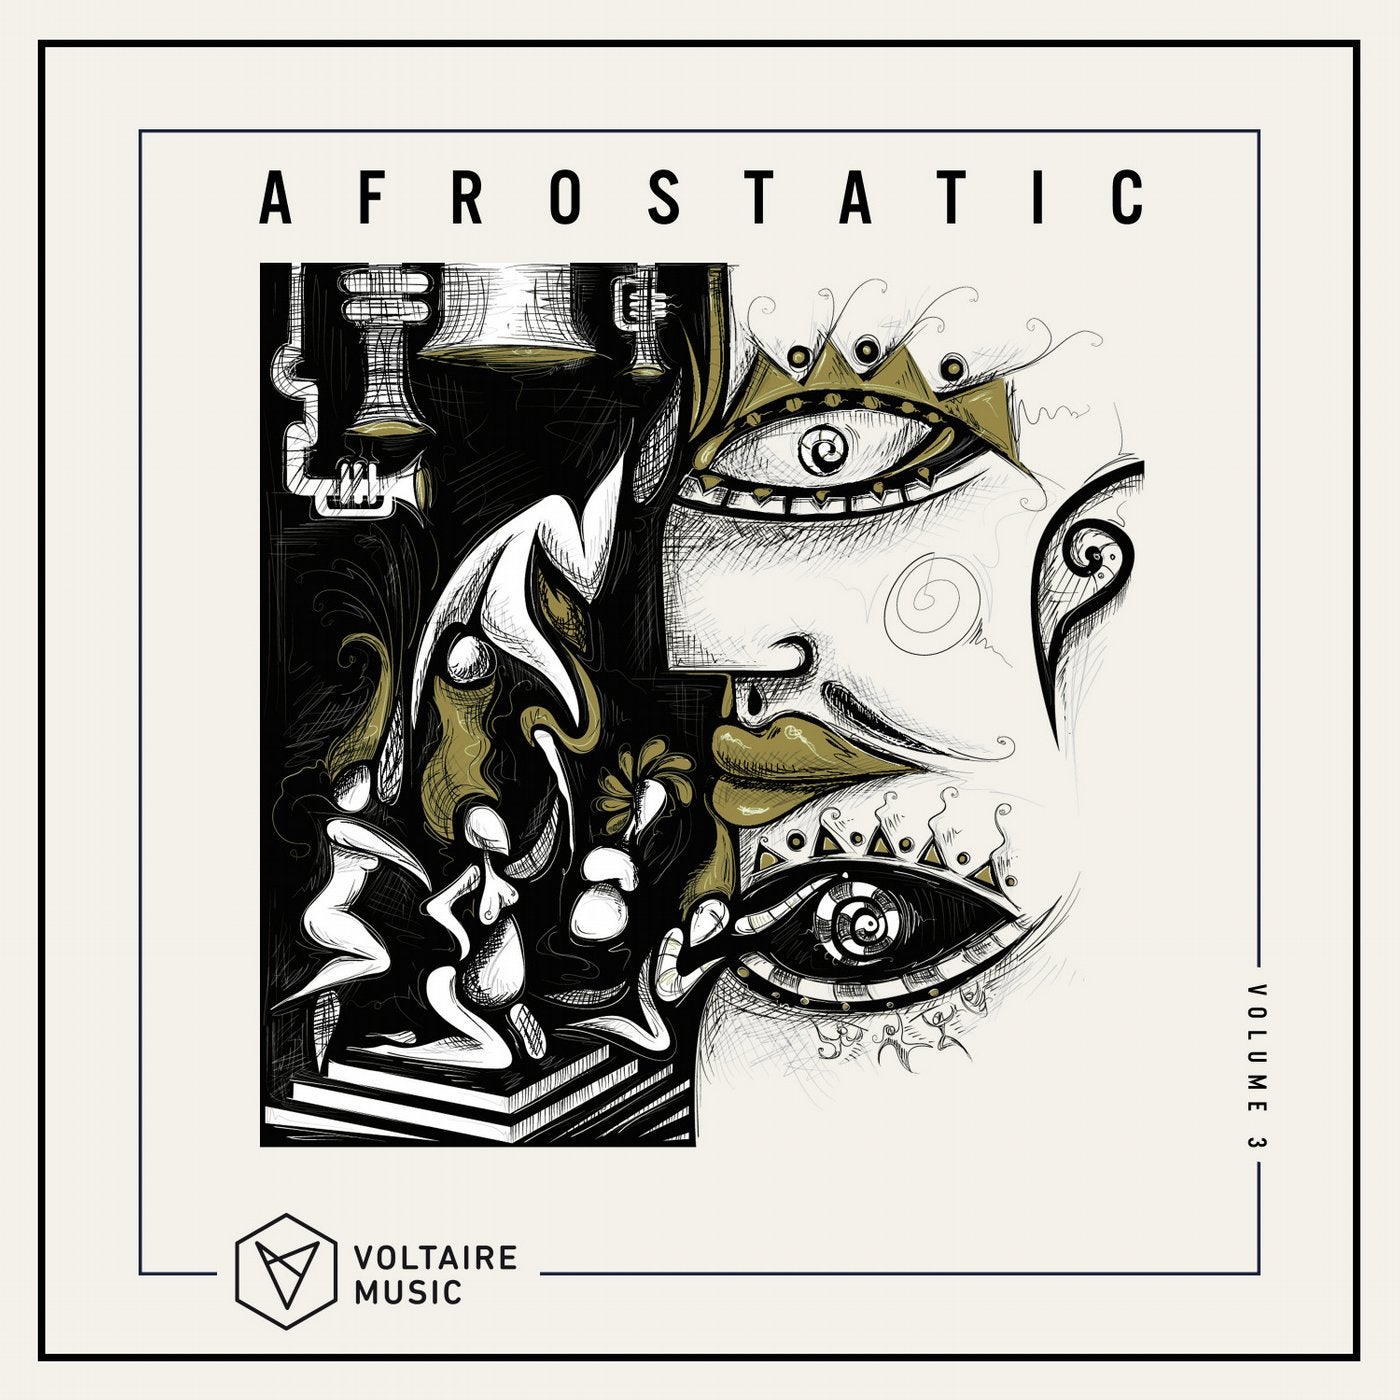 Voltaire Music pres. Afrostatic Vol. 3